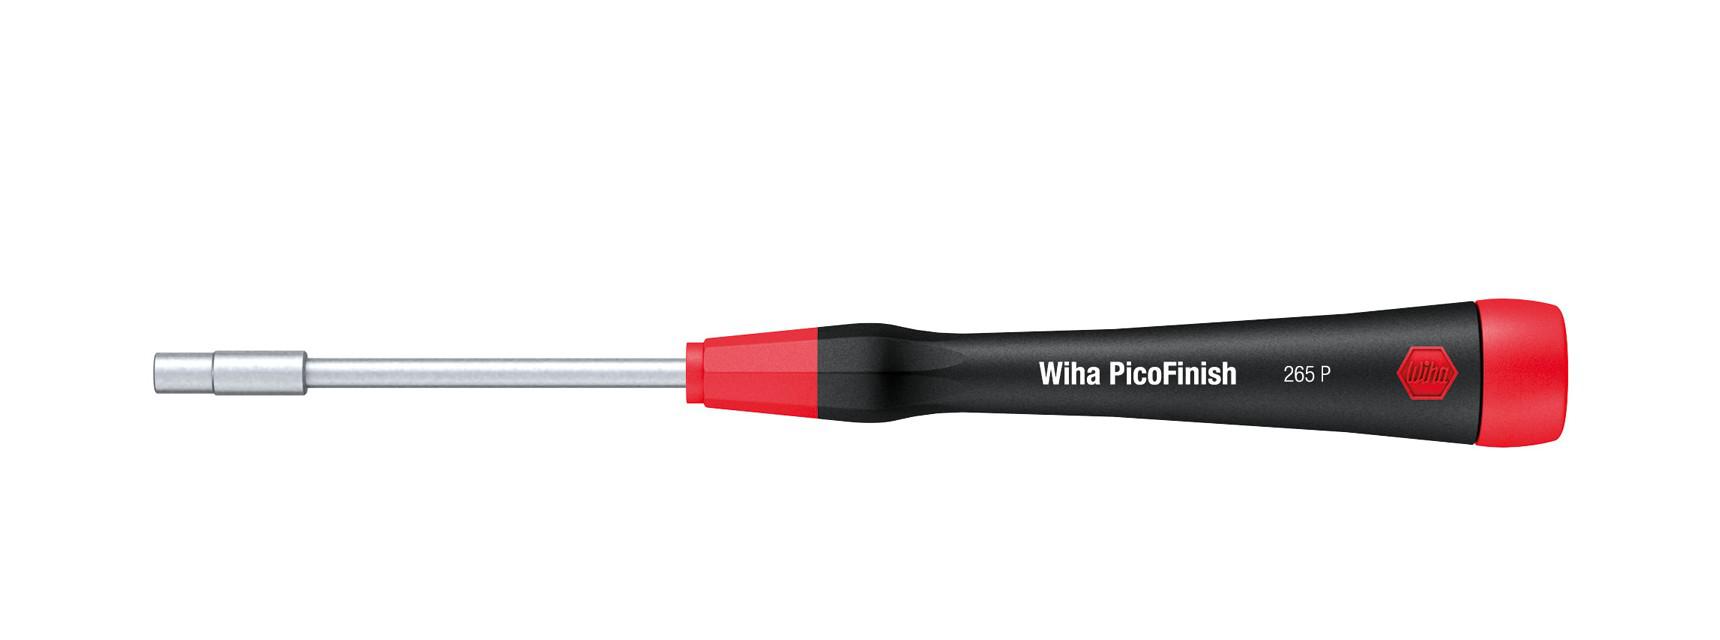 картинка Торцевой ключ PicoFinish 265P WIHA от магазина "Элит-инструмент"